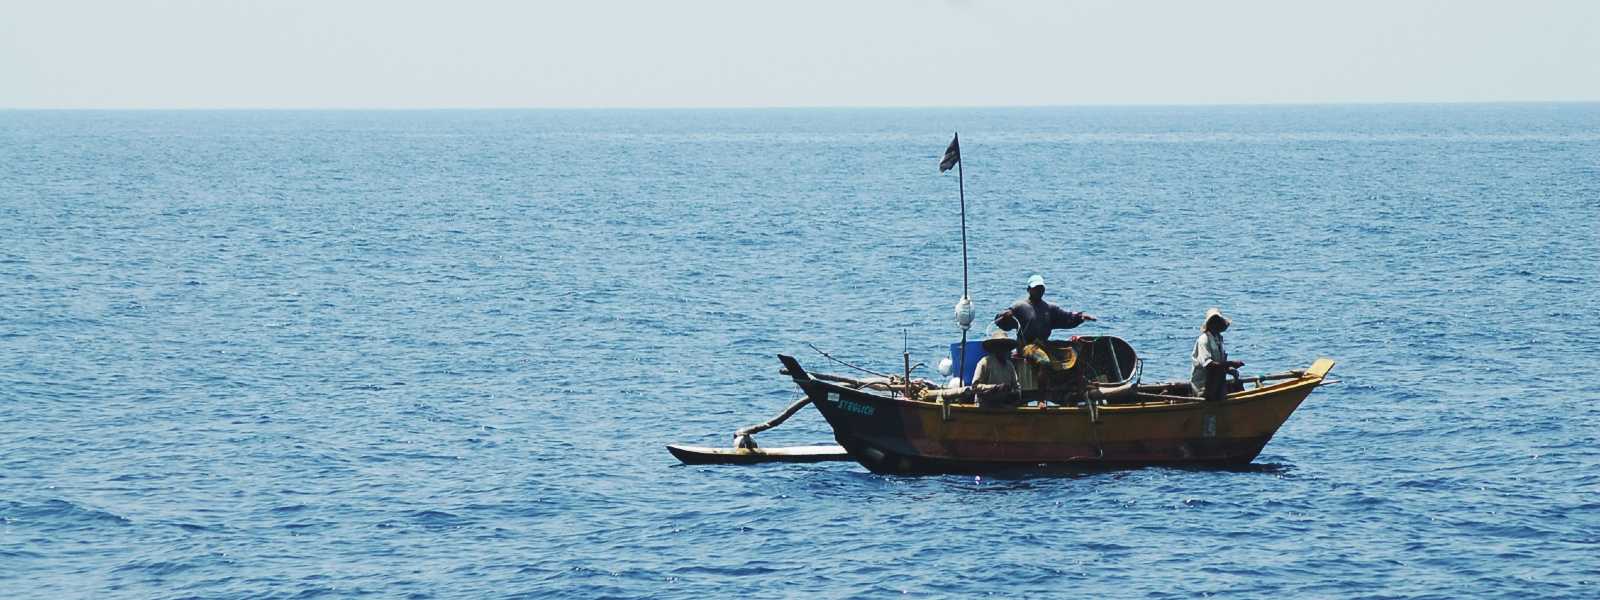 India fishermen exploiting Sea of Sri Lanka